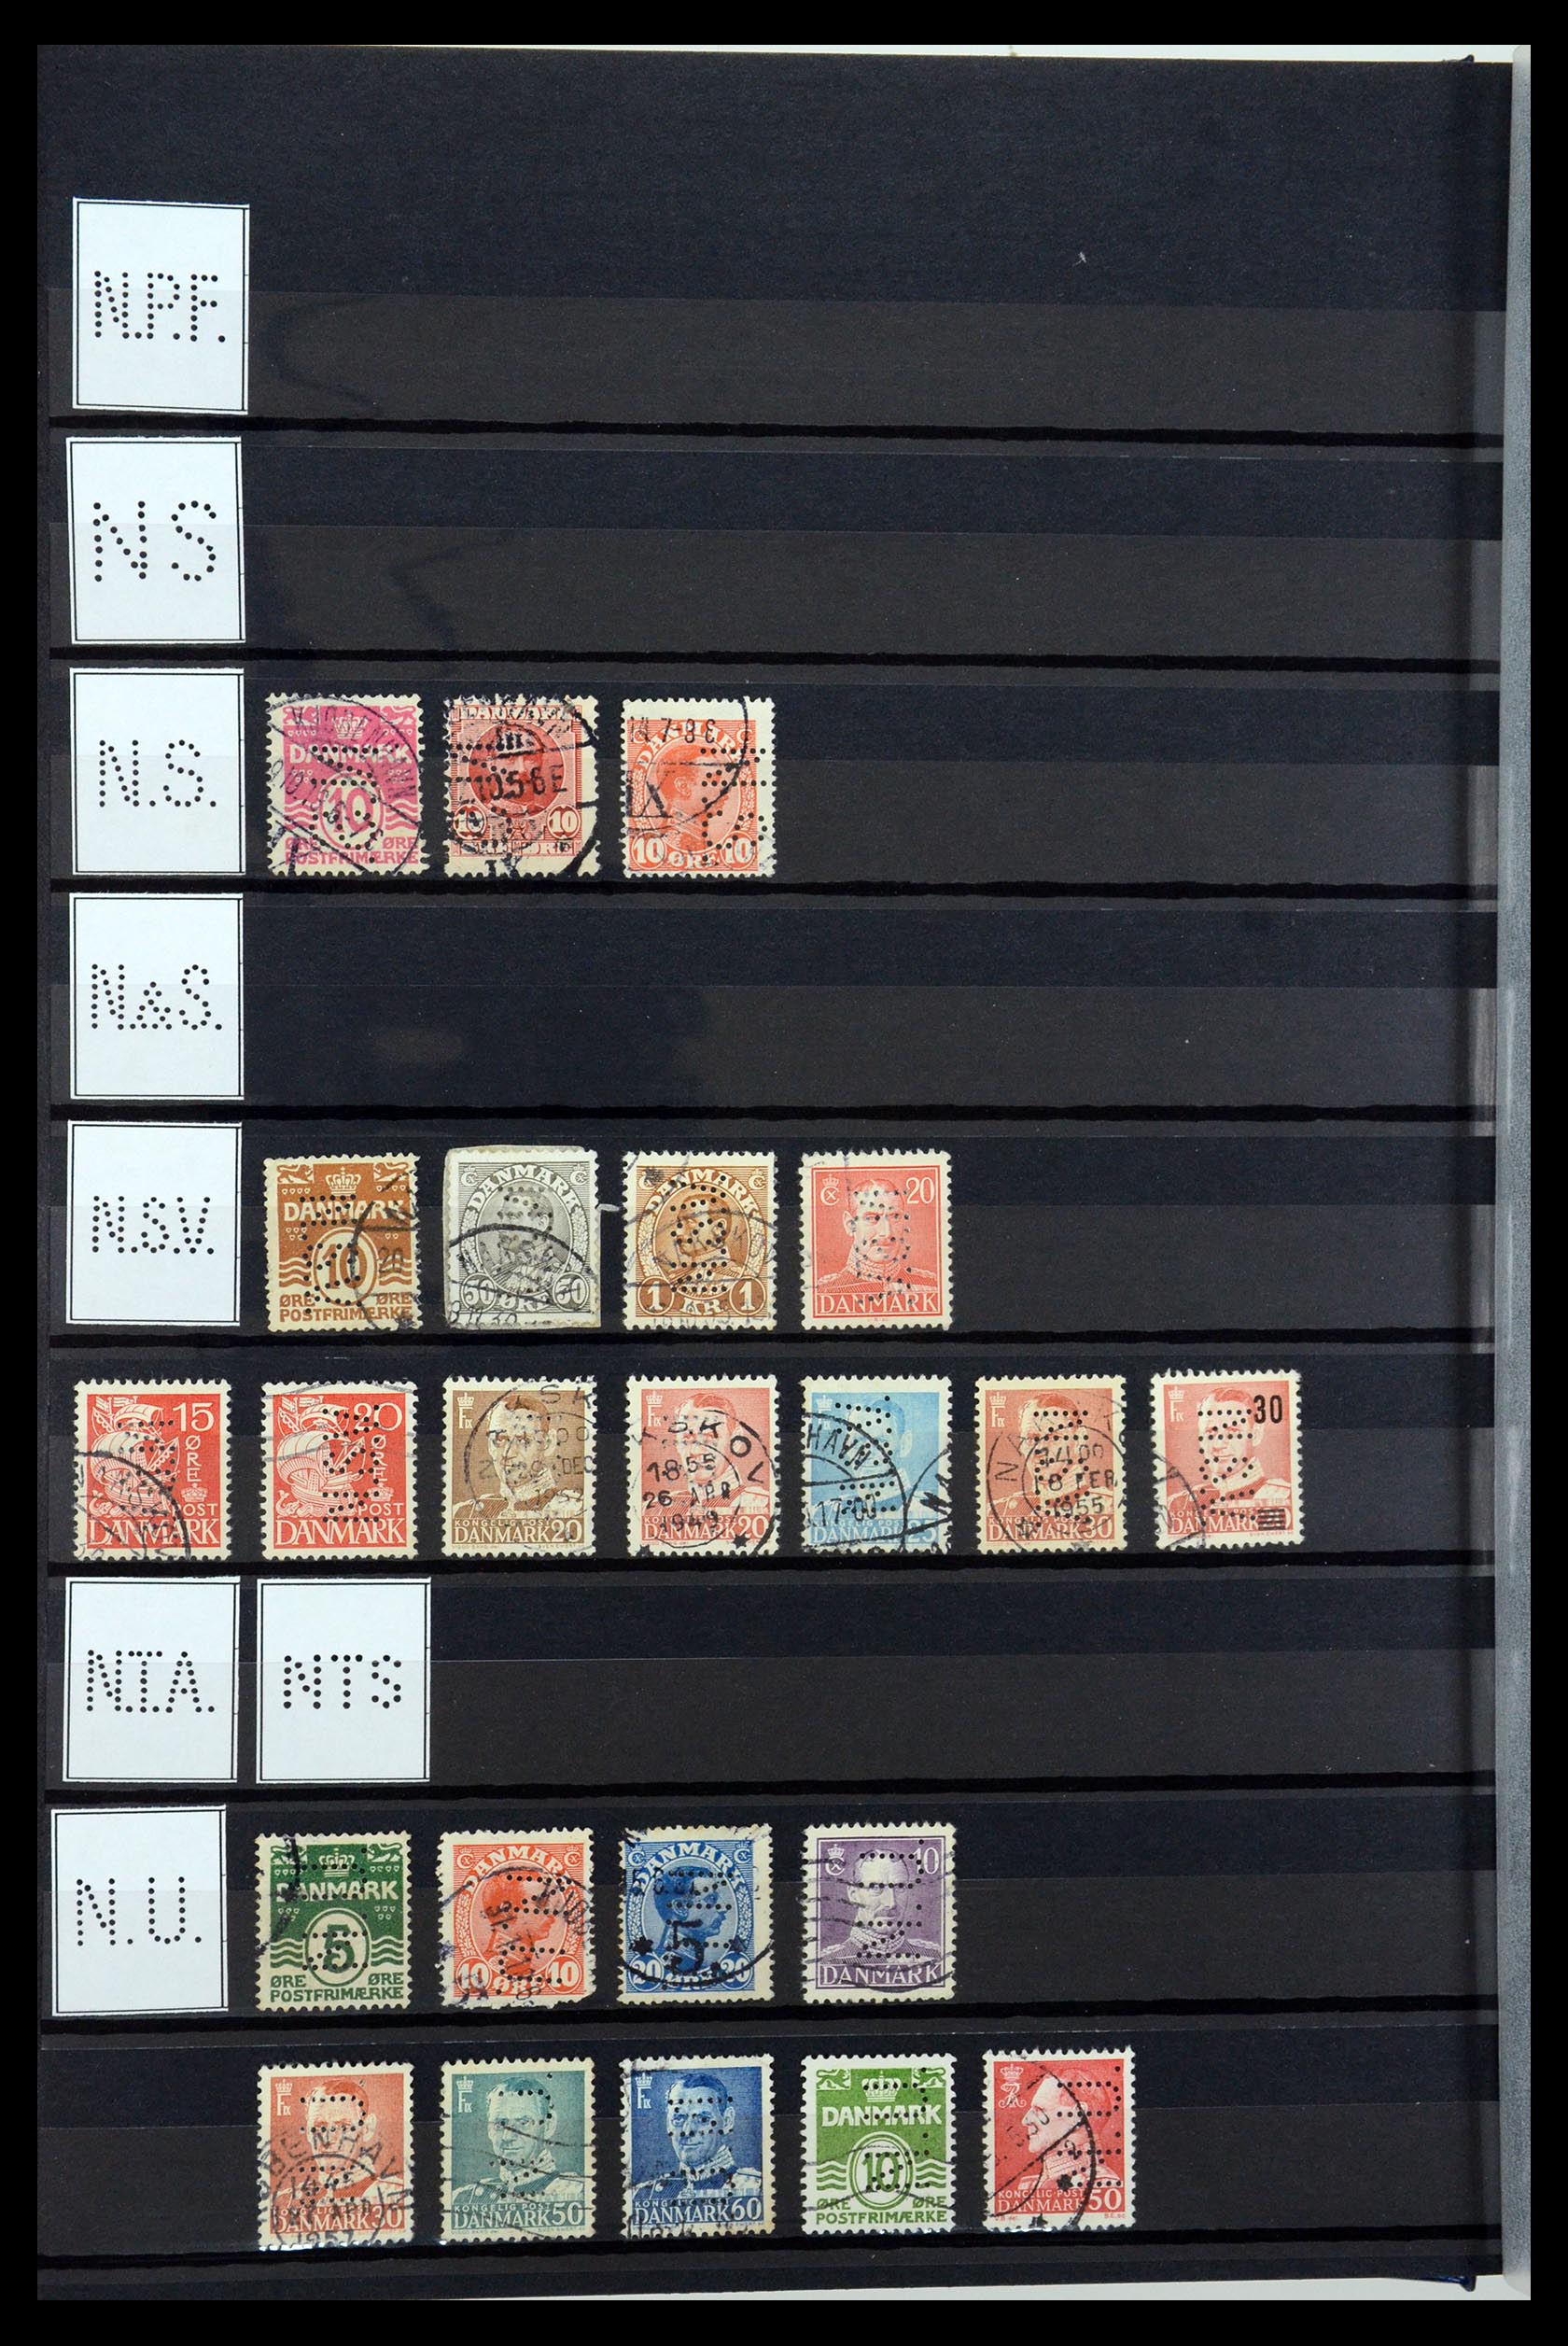 36396 183 - Stamp collection 36396 Denmark perfins.